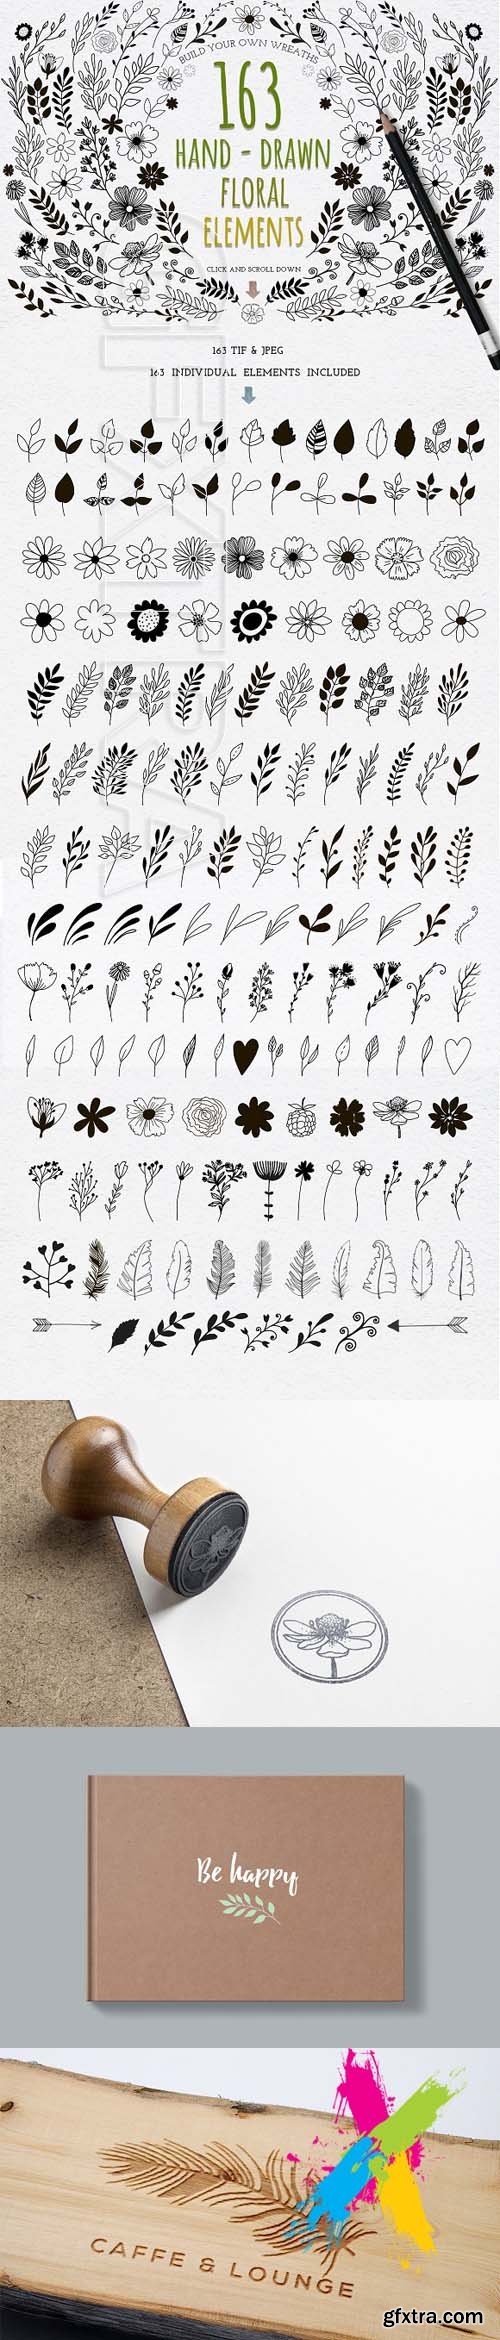 CM - Hand Drawn floral elements 1491780